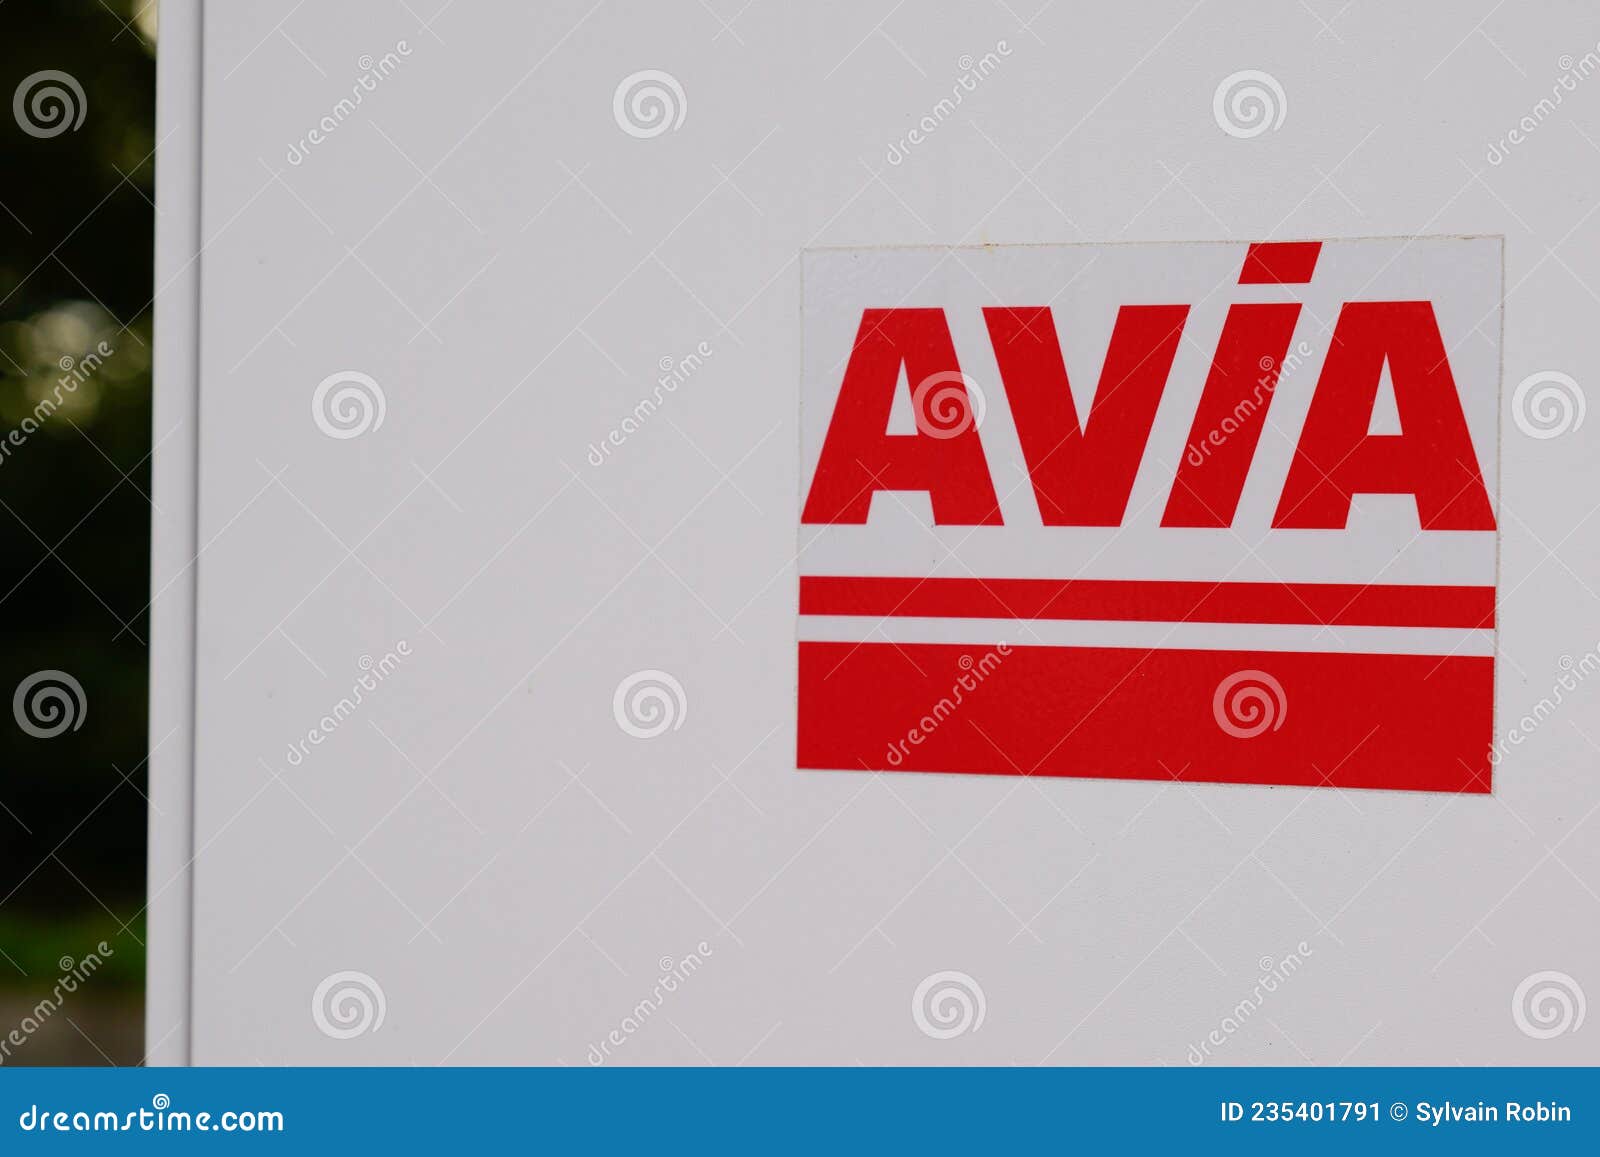 Avia Gas Station Brand Text Company Logo Sign Service Petrol Pump Garage  Editorial Photo - Image of auto, company: 235401791